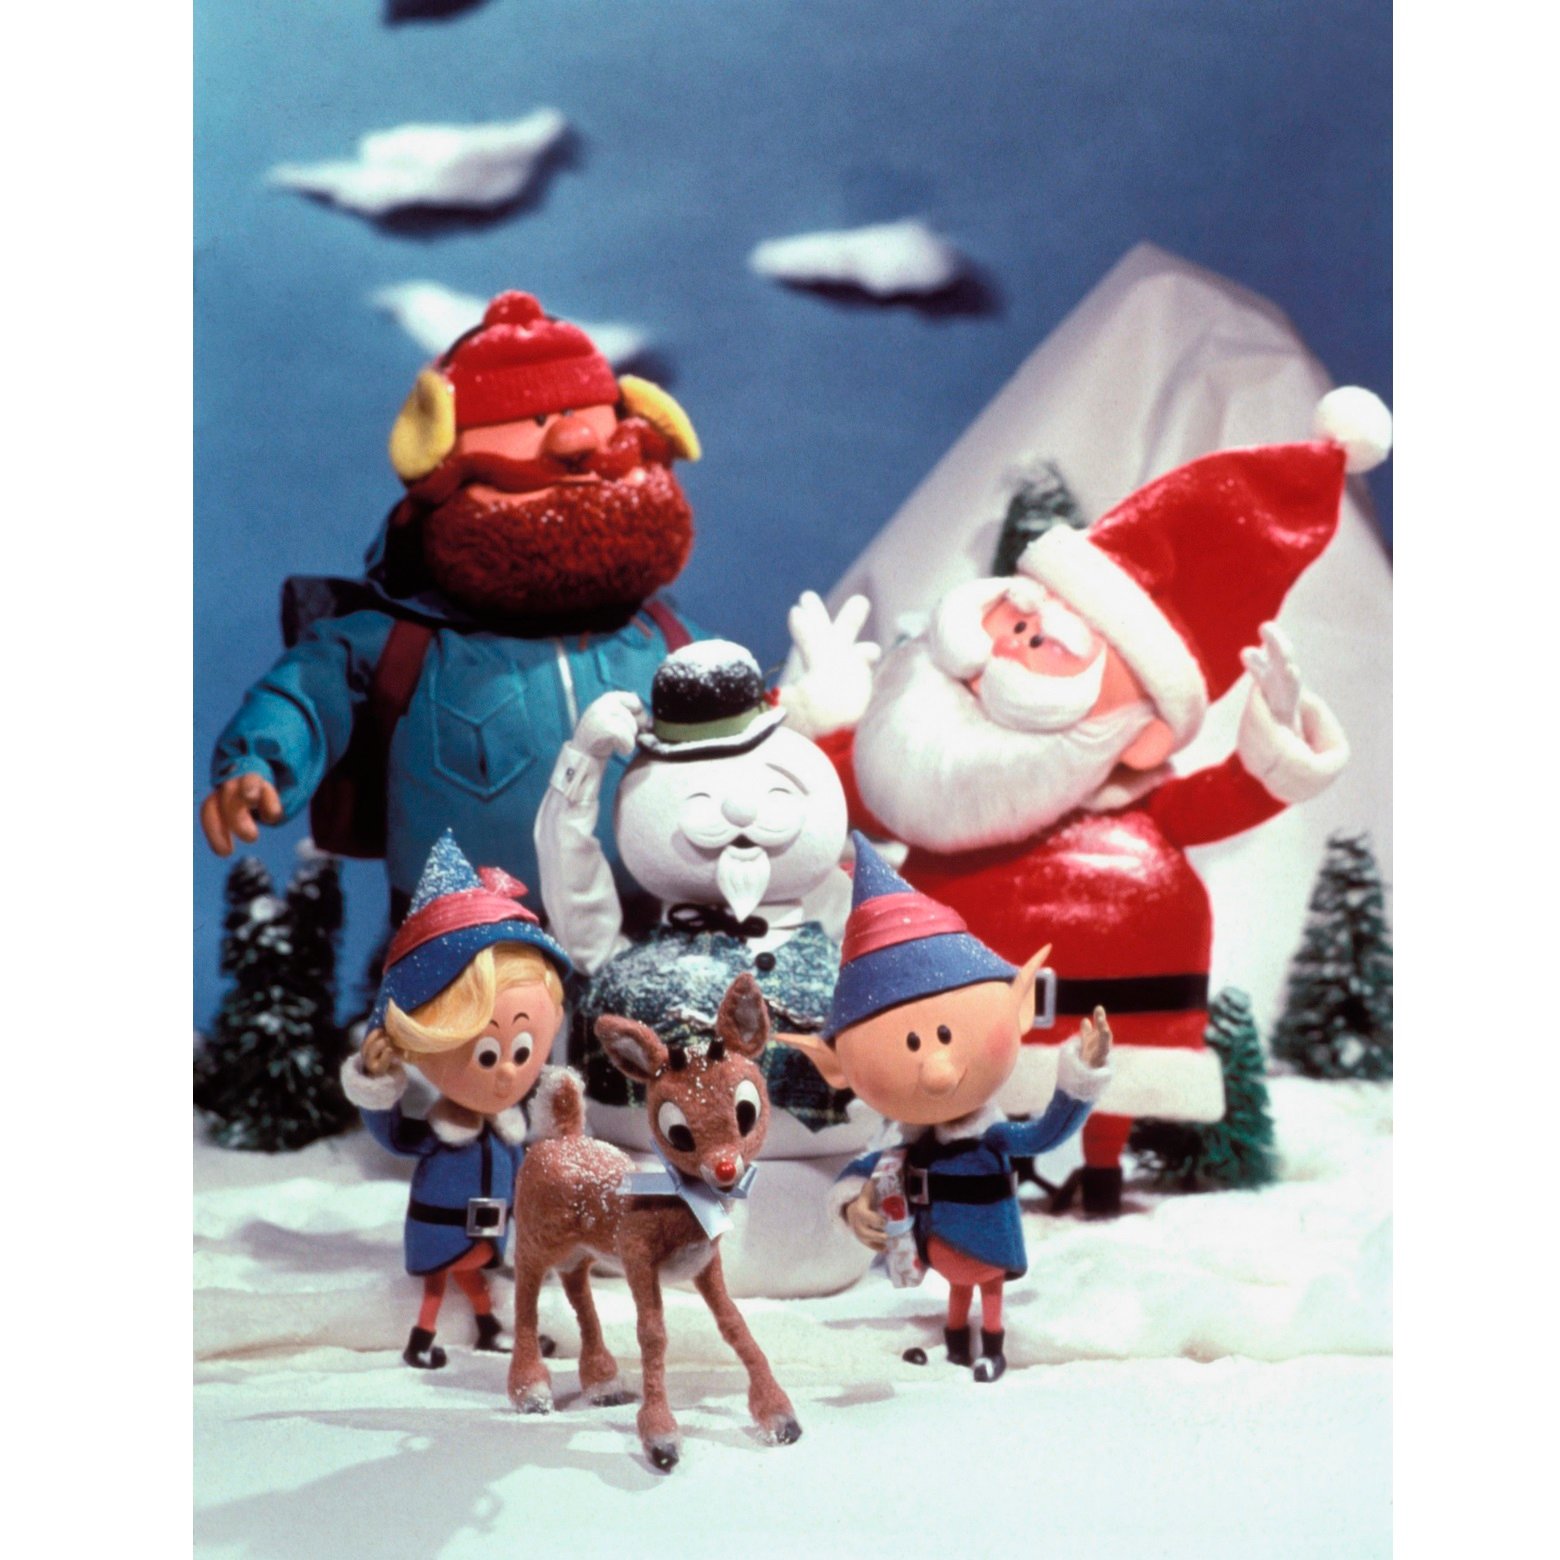 Hermey, Rudolph, Head Elf, Yukon Cornelius, Sam the Snowman, Santa Claus from 'Rudolph the Red-Nosed Reindeer' airing on CBS schedule Nov 22, 2021